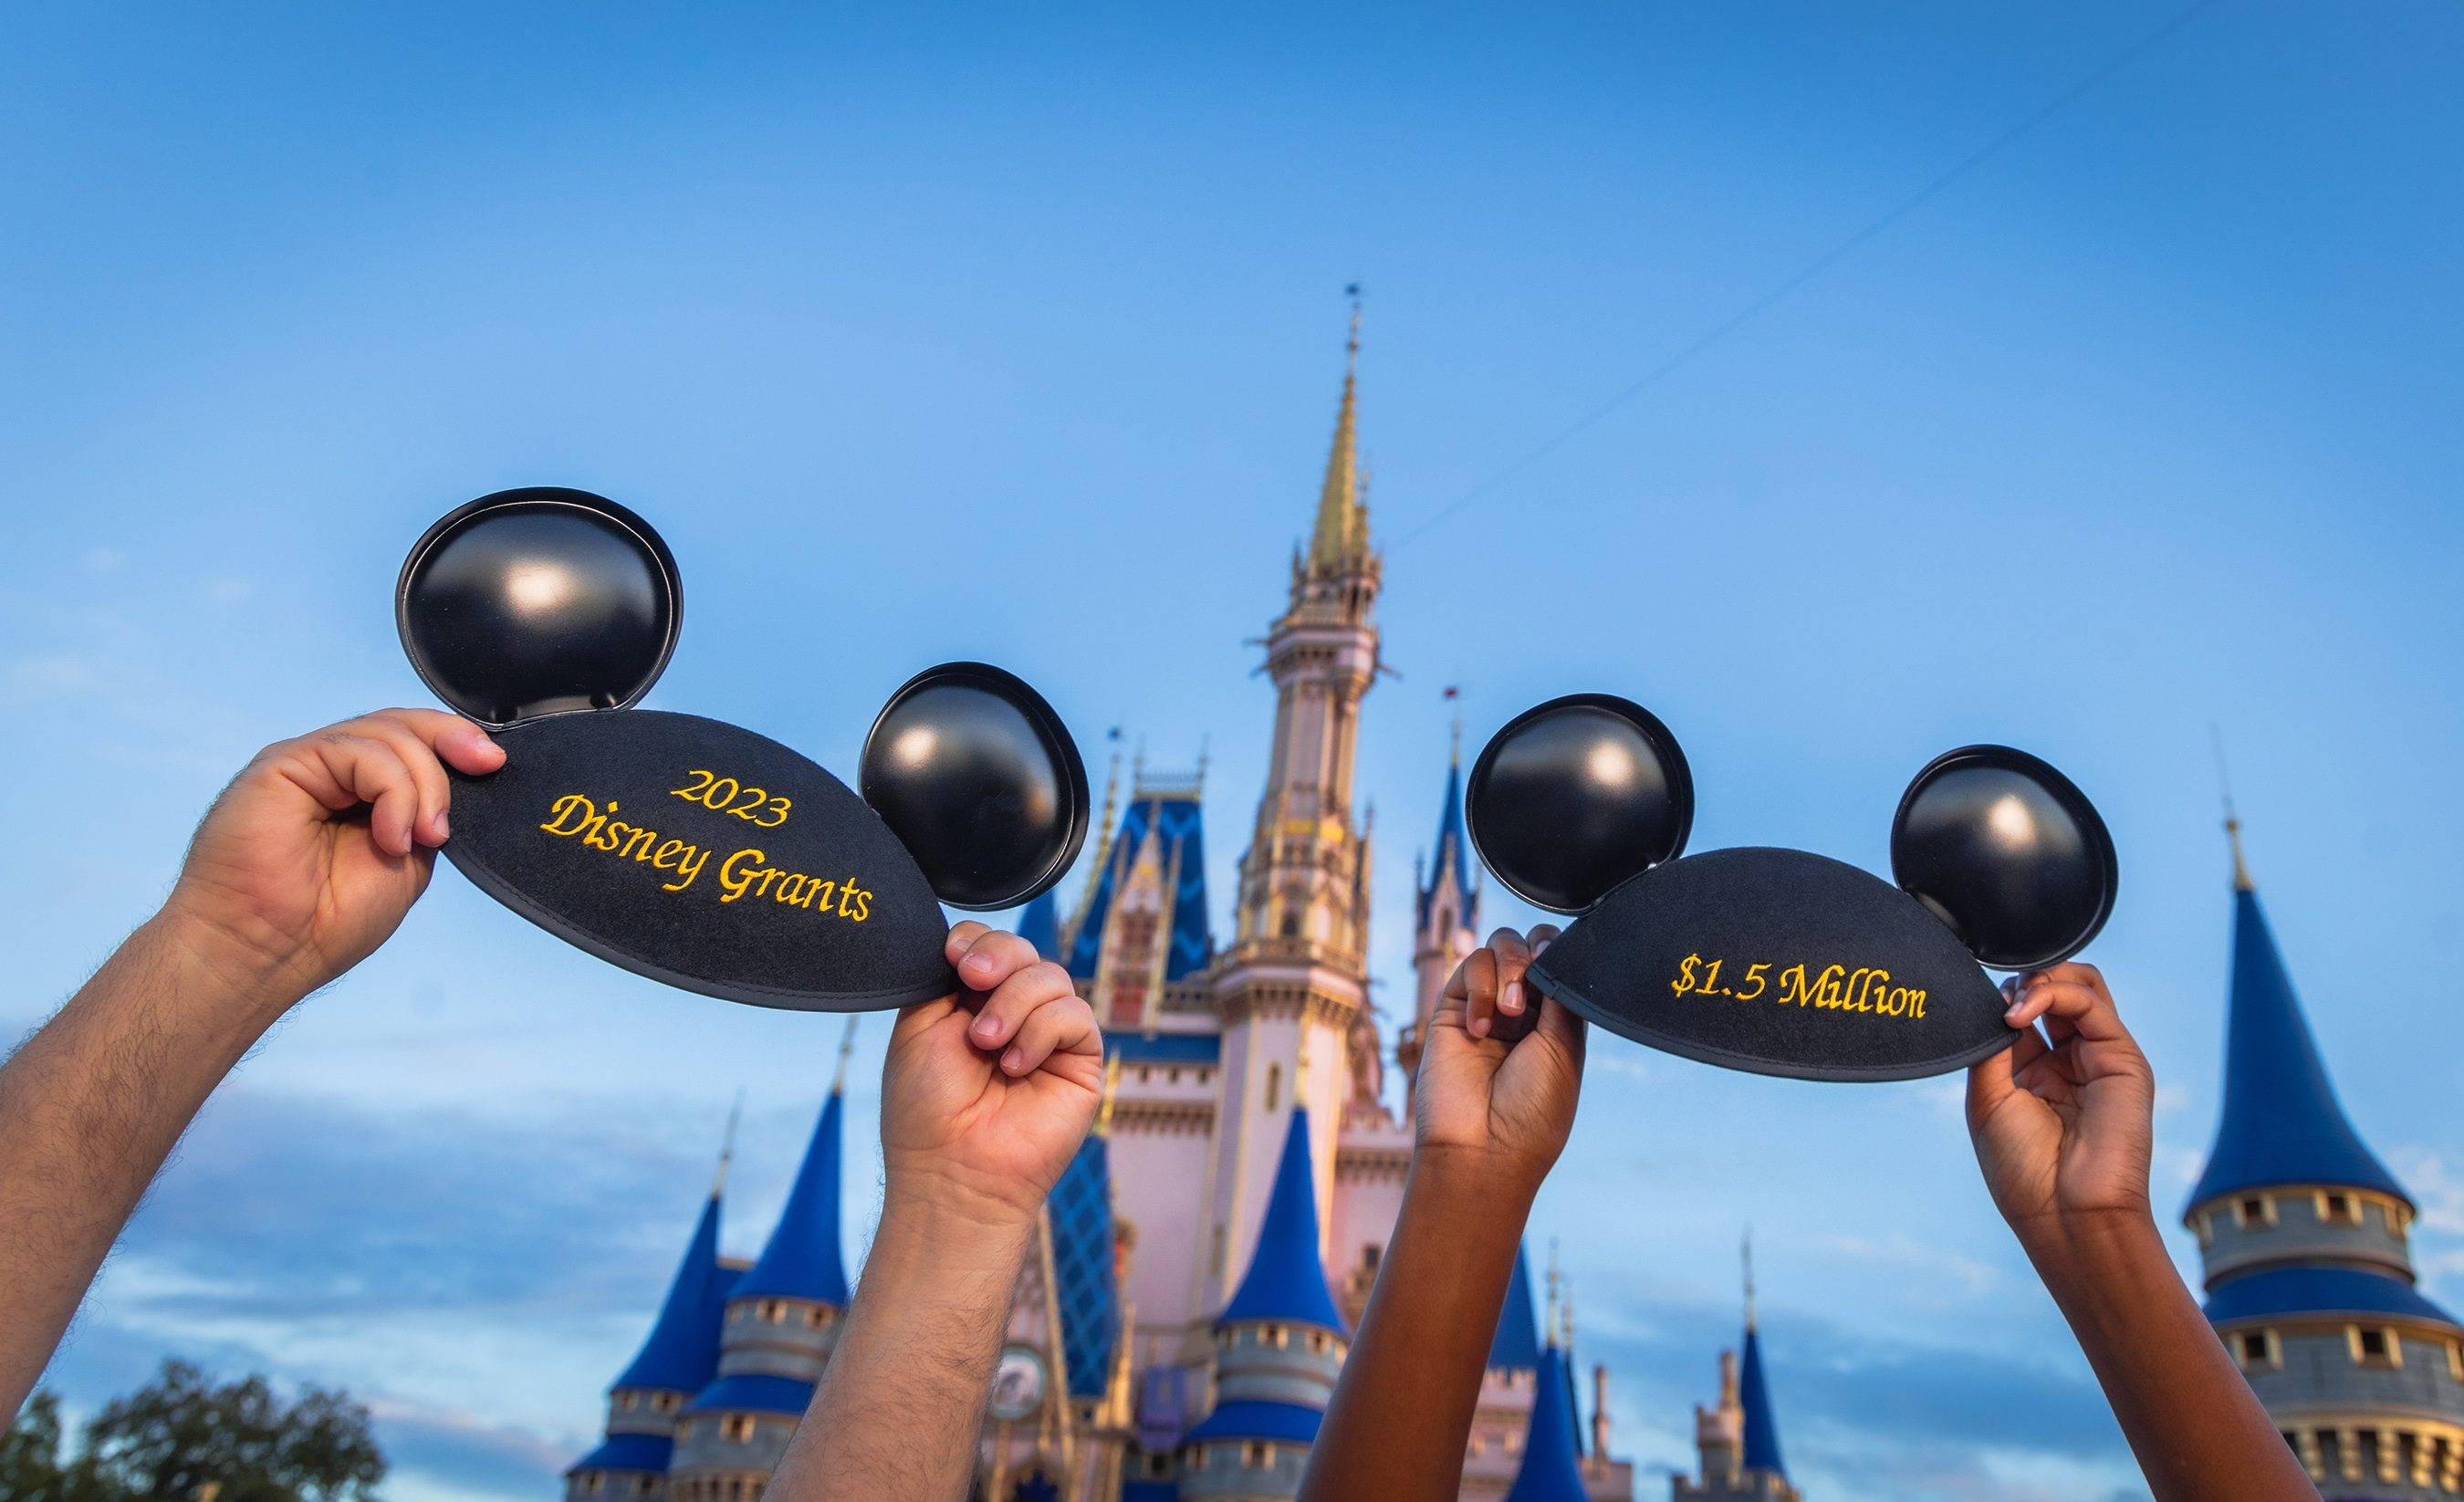 Walt Disney World Announces New 1.5 Million Donation to 15+ Florida Nonprofits